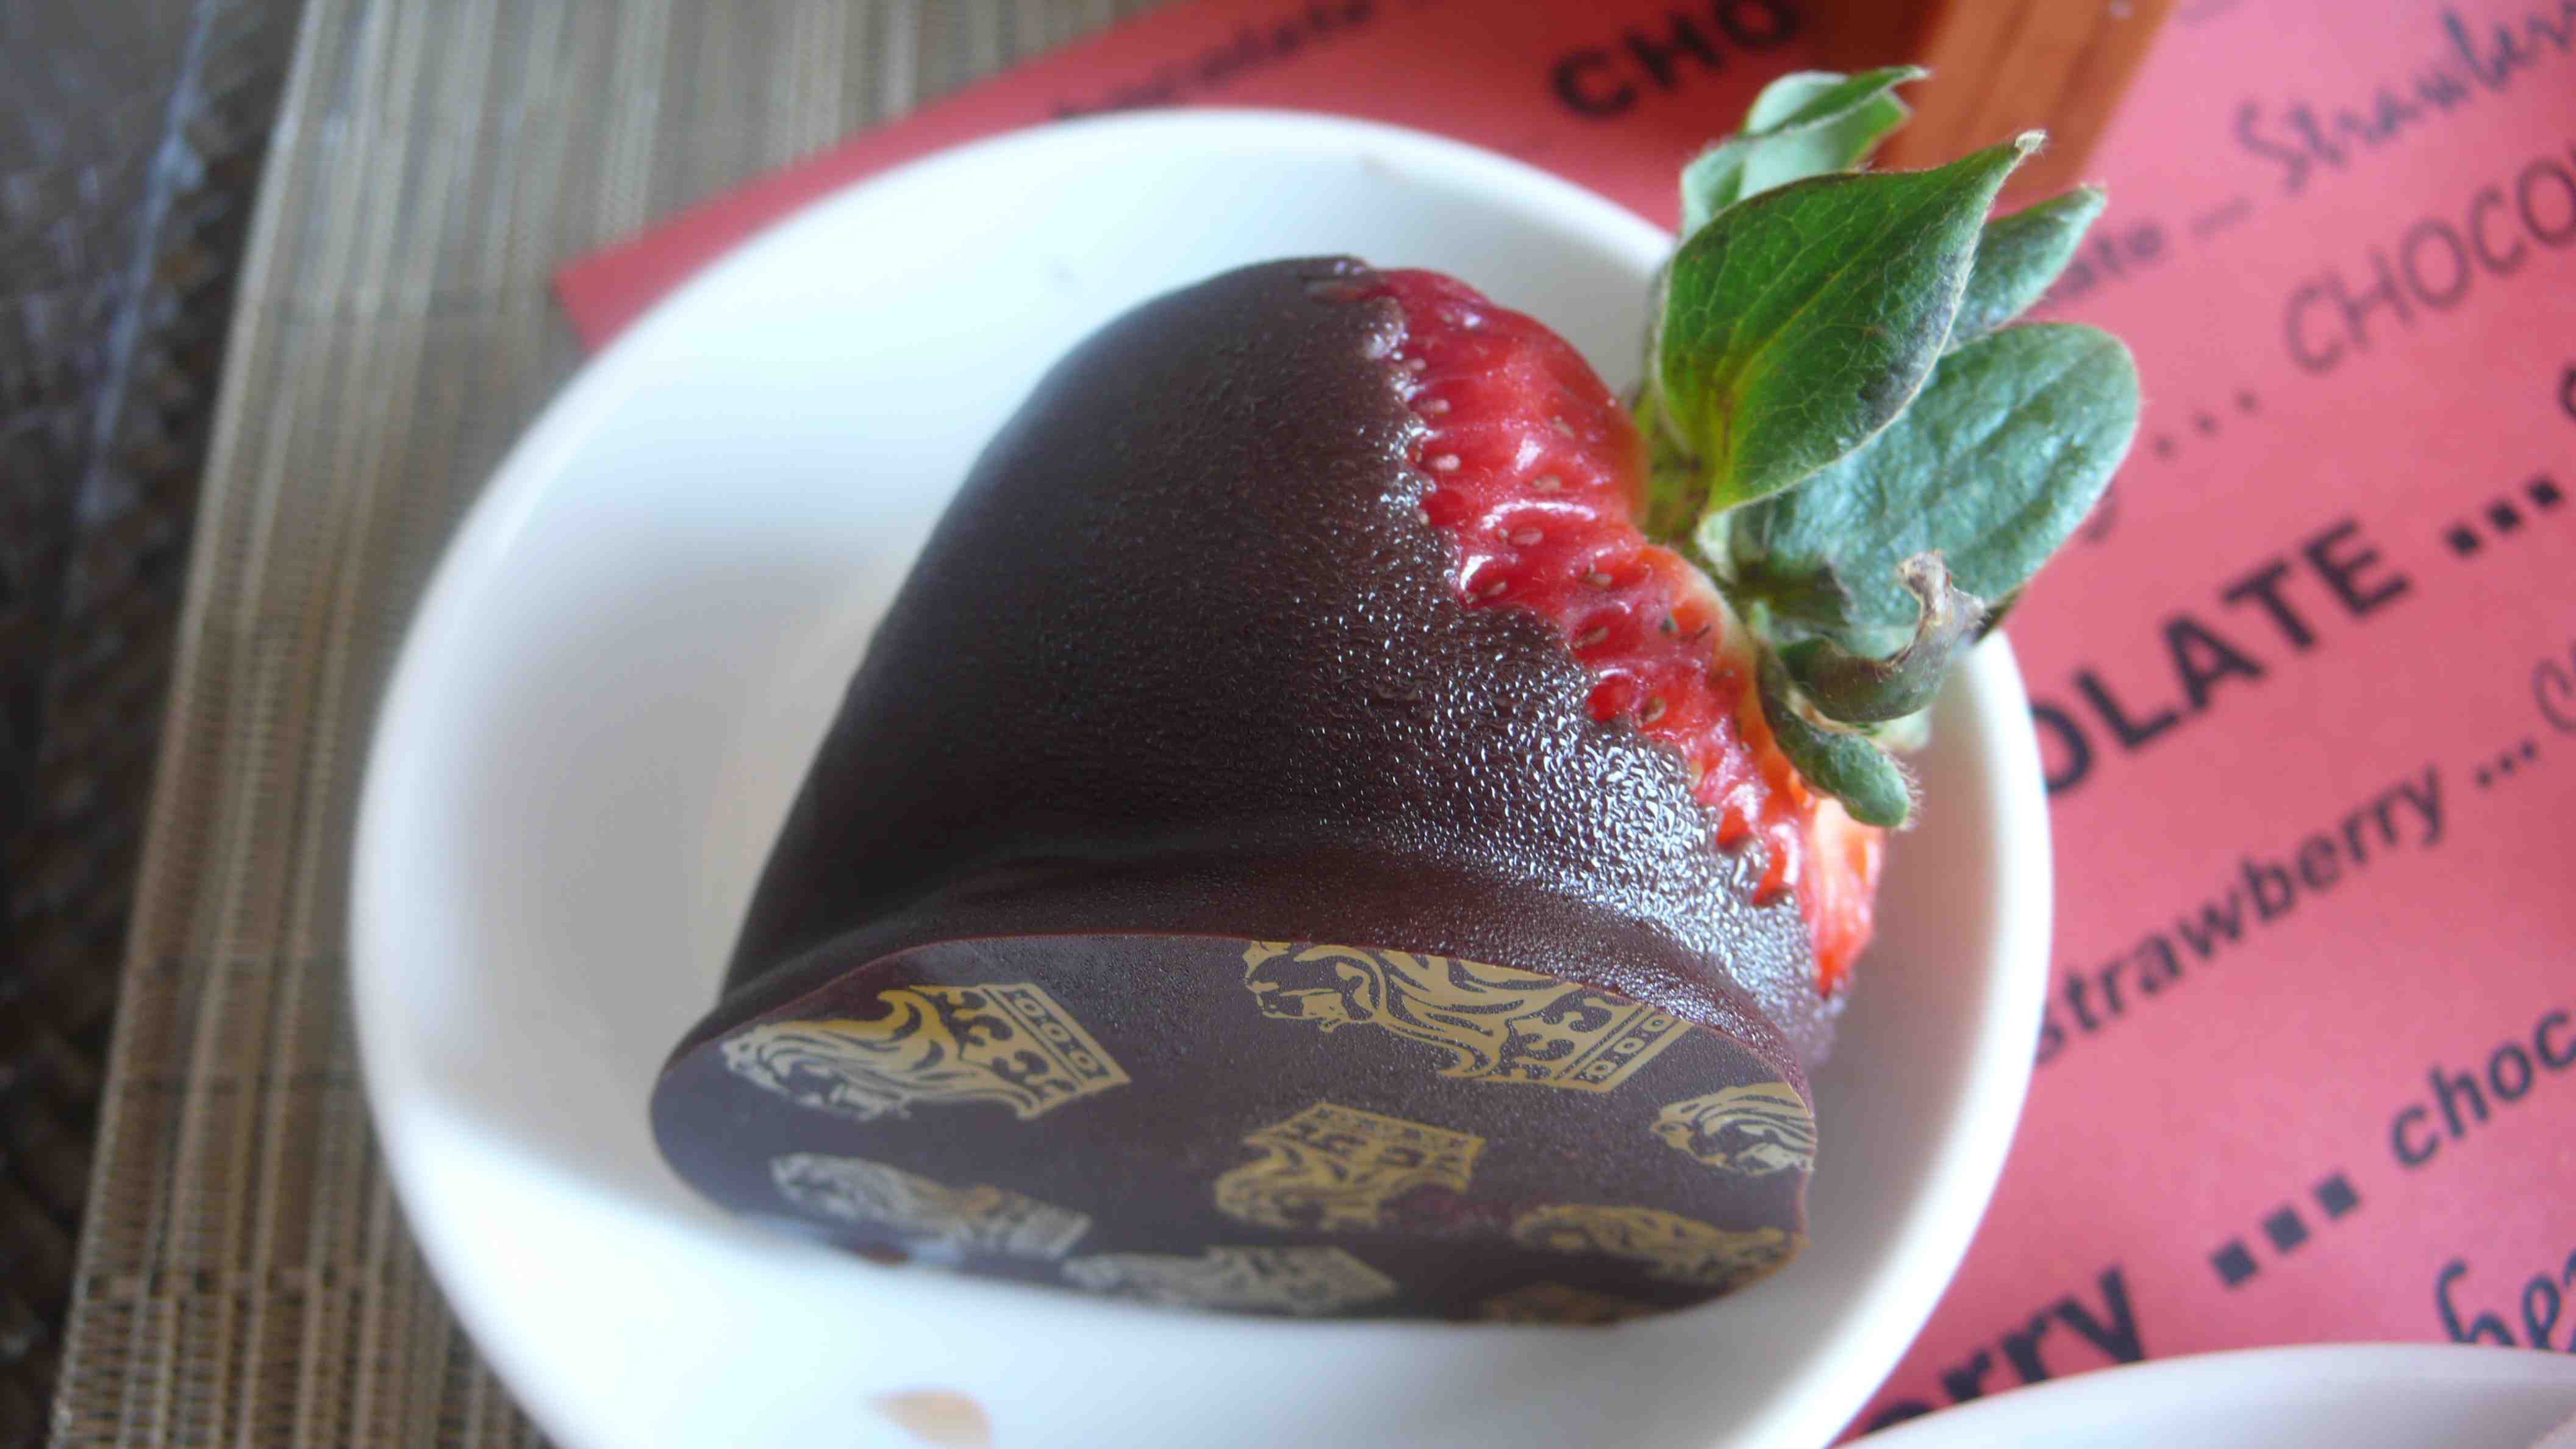 chocolate strawberry, my favorite